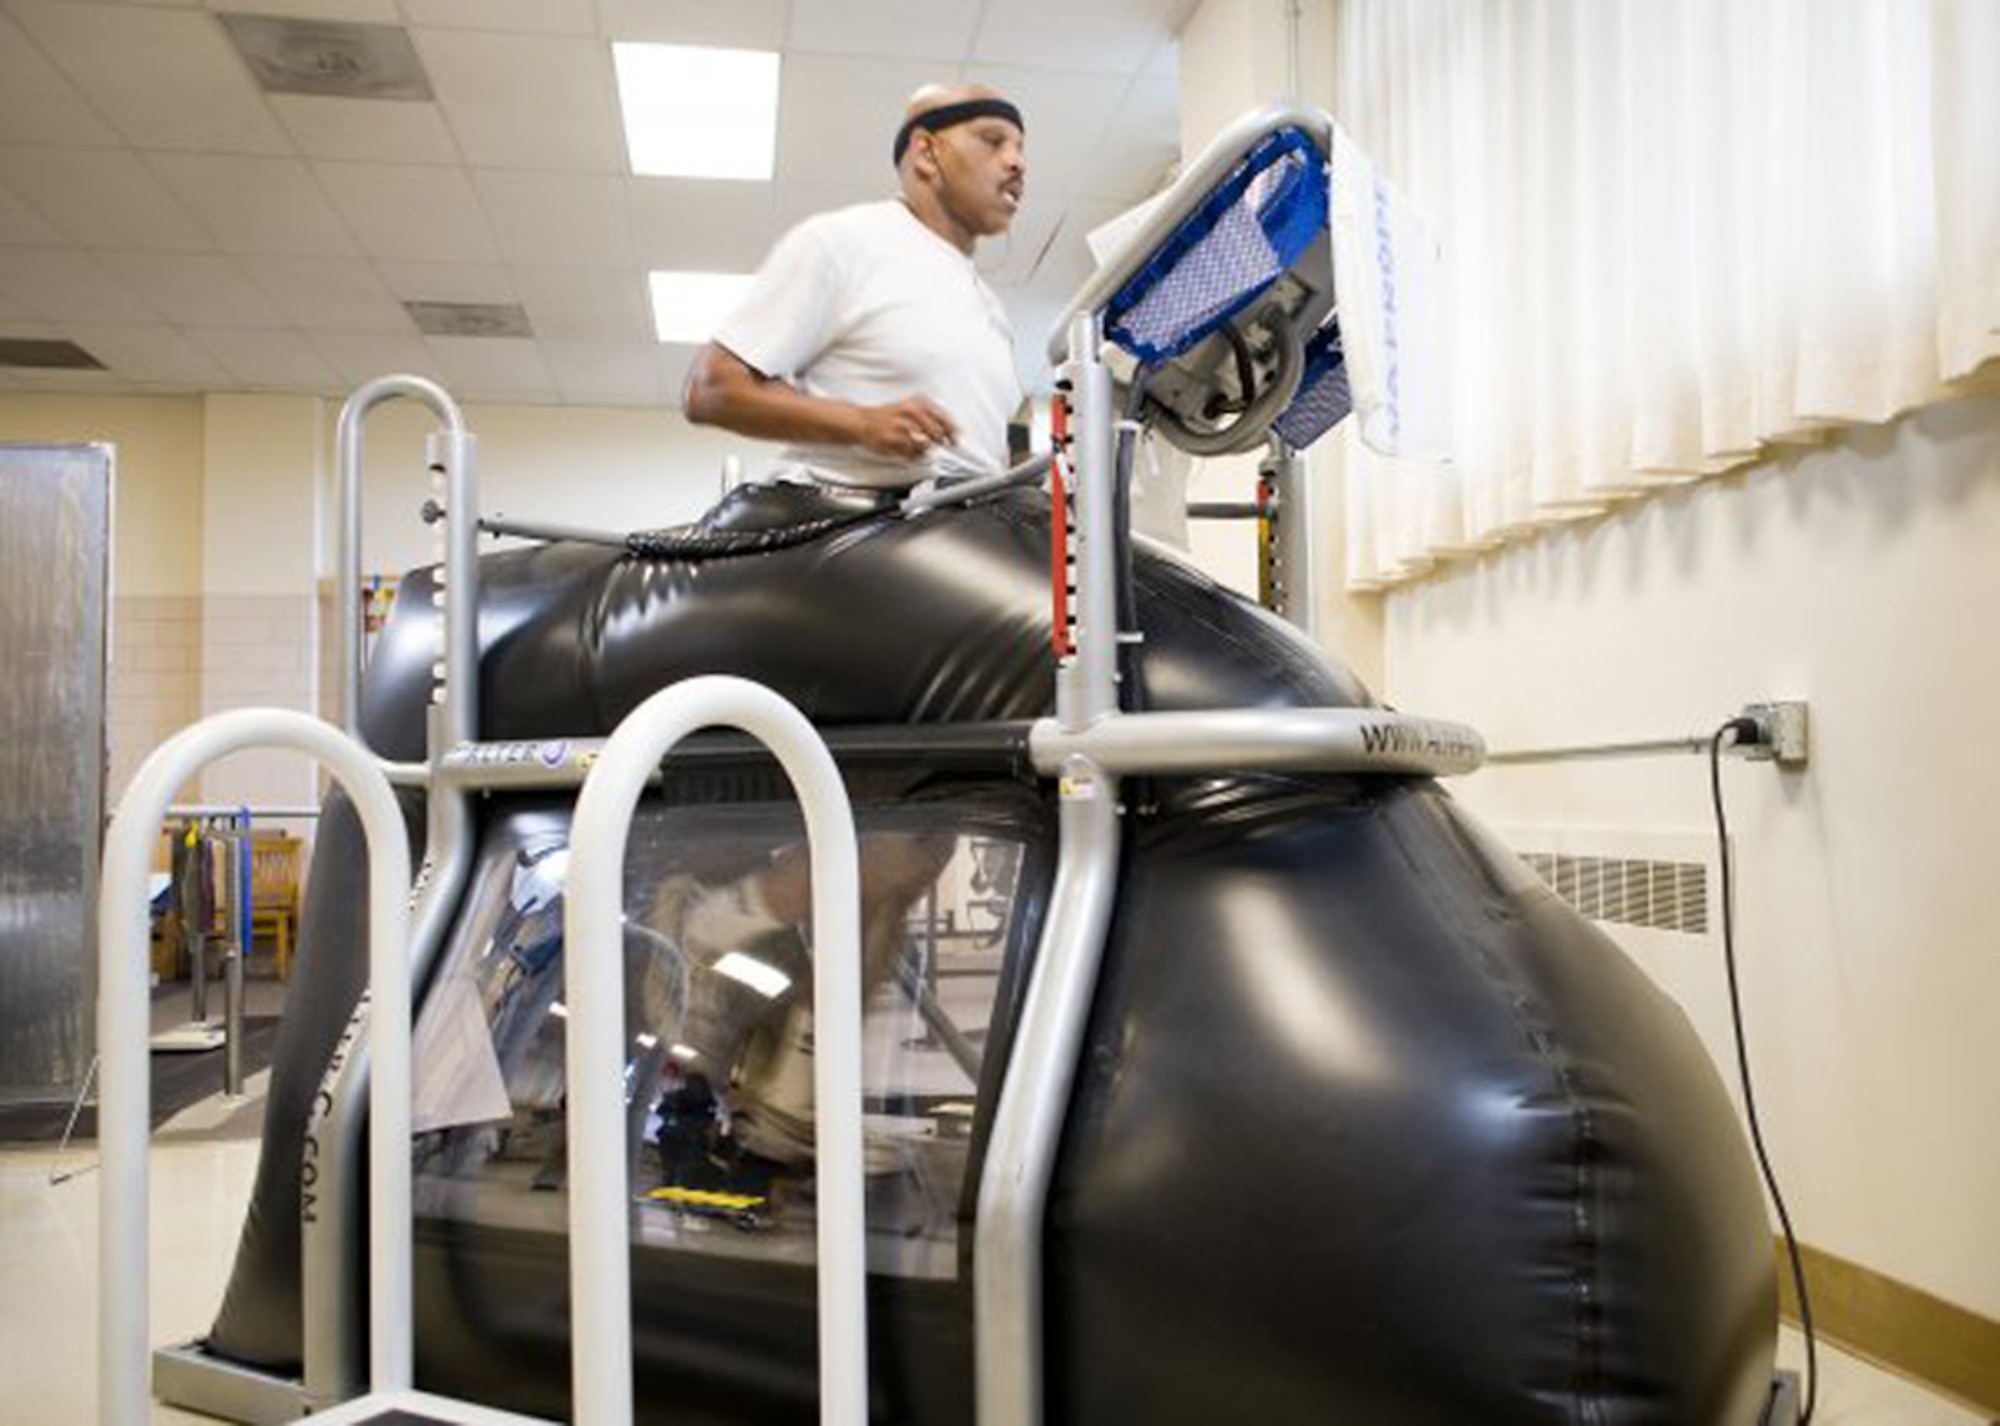 Veterans use NASA anti-gravity treadmill in treatment > Air Force